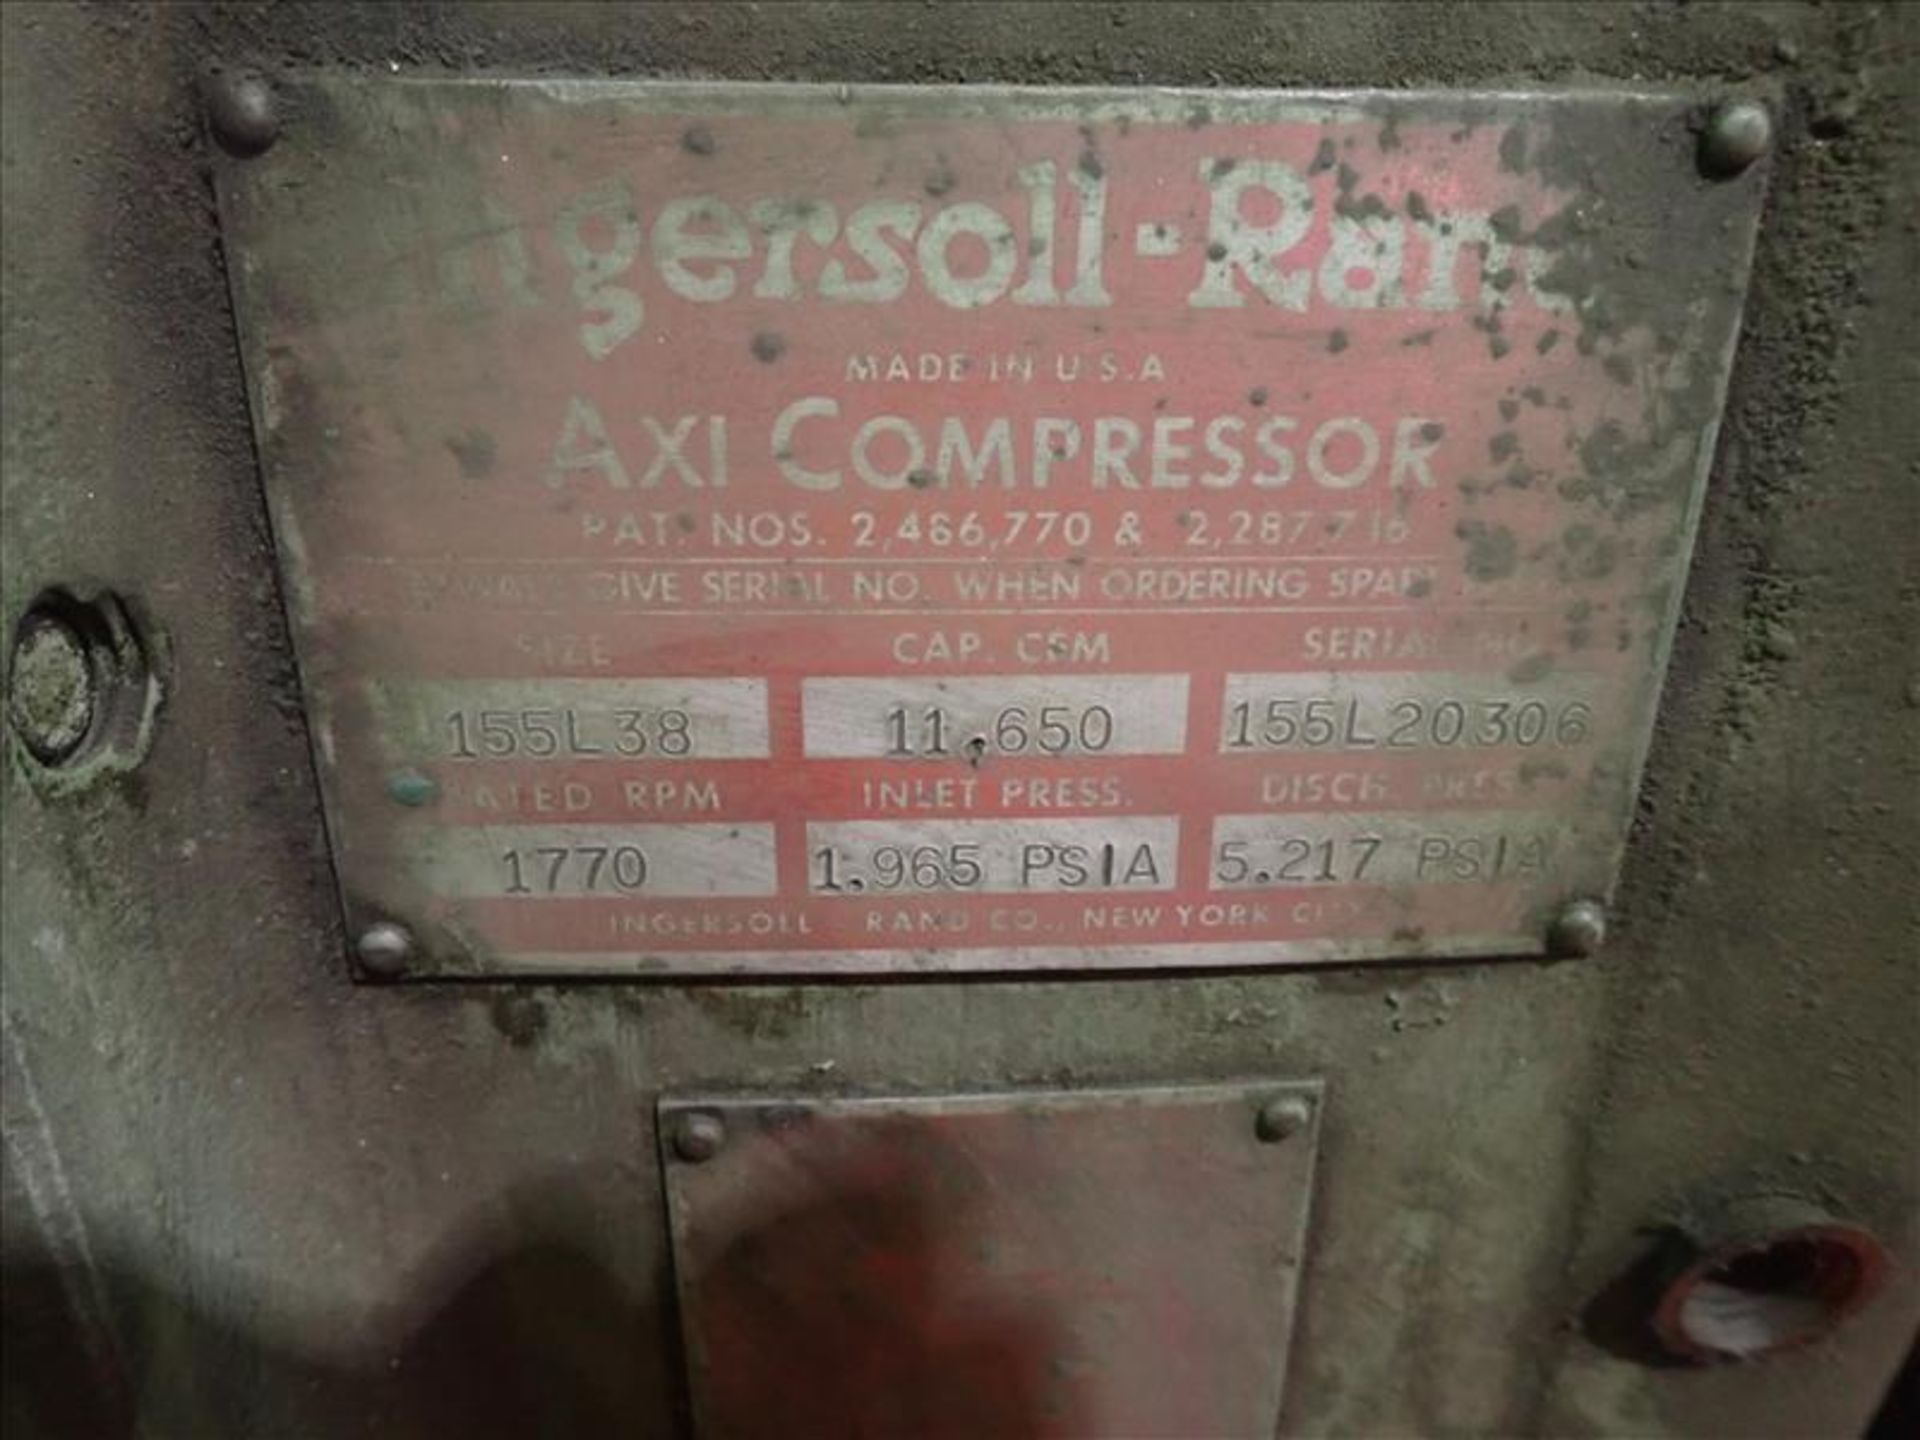 spare: Ingersoll Rand Axi vacuum pump, size 155L38, ser. no. 155L20306, 1770 CFM (Tag 7025 Loc - Image 2 of 2